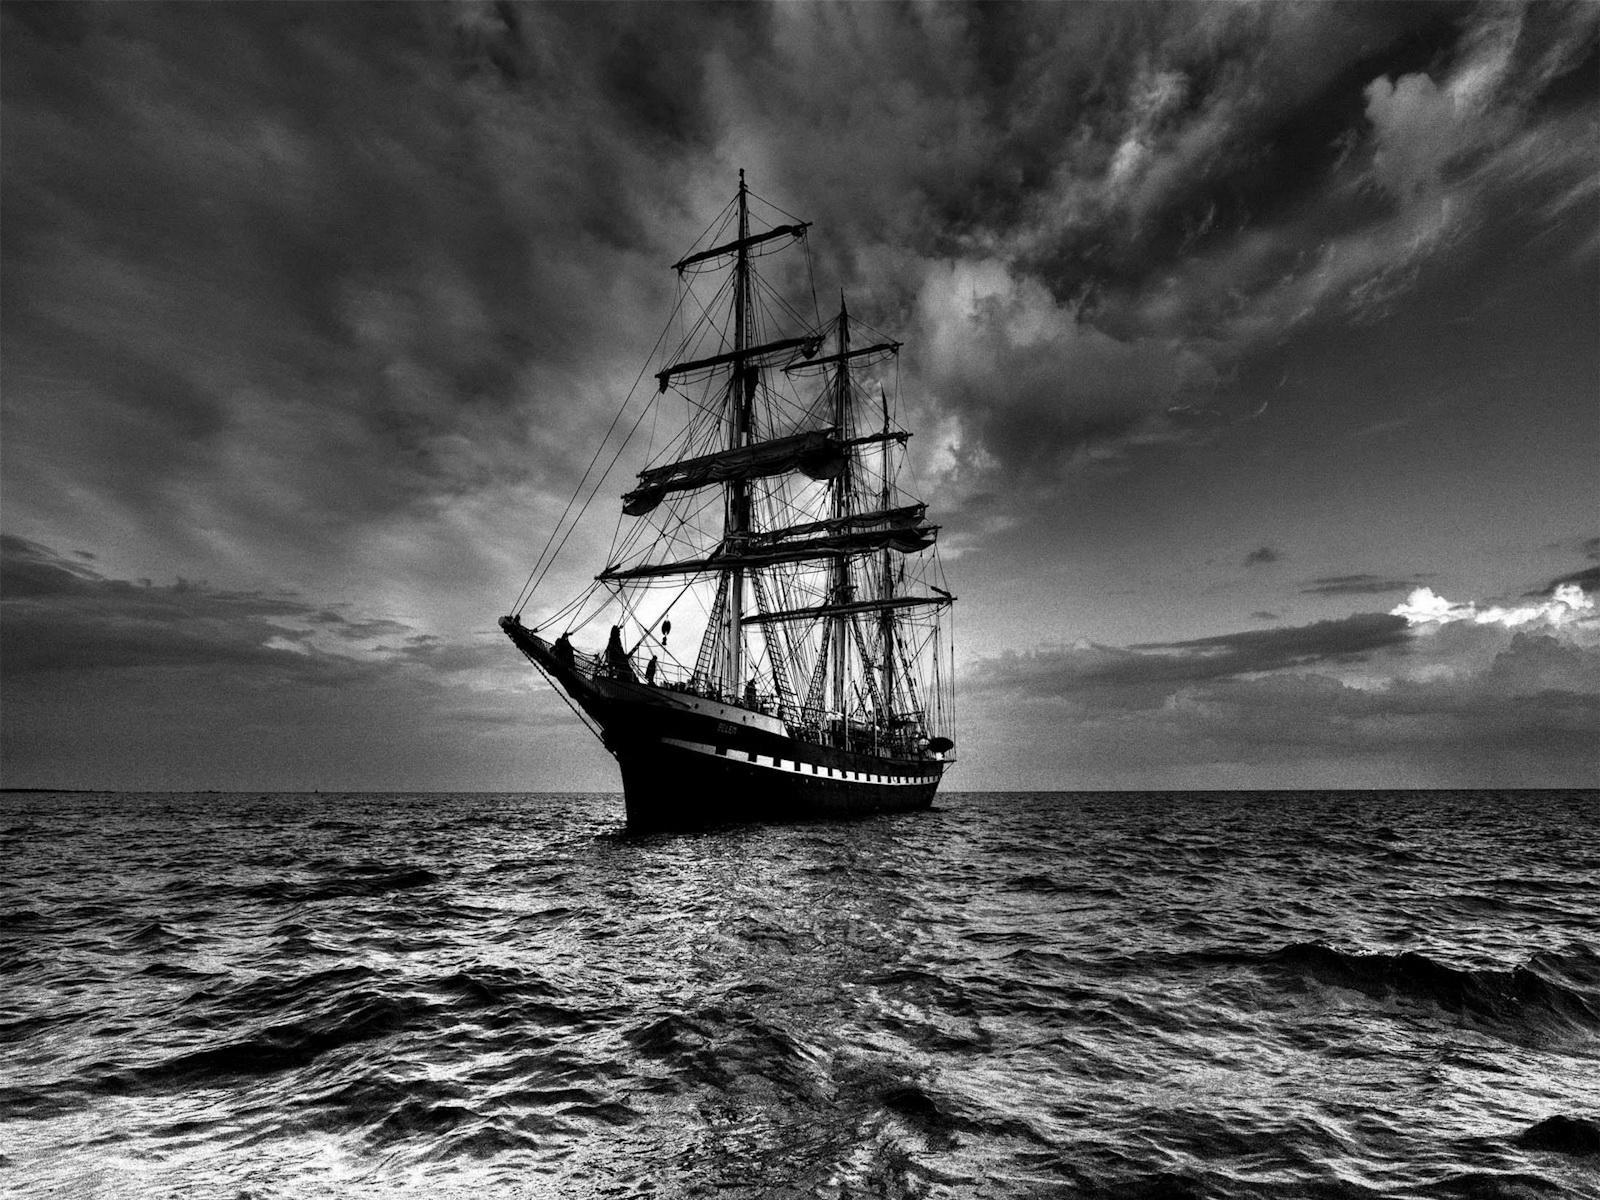 http://2.bp.blogspot.com/-dn_varVnb5U/UF3I-YPBi-I/AAAAAAAAALo/ioCNaB_gLjg/s1600/sailing-boat-ocean-black-and-white-wallpaper-hd.jpg